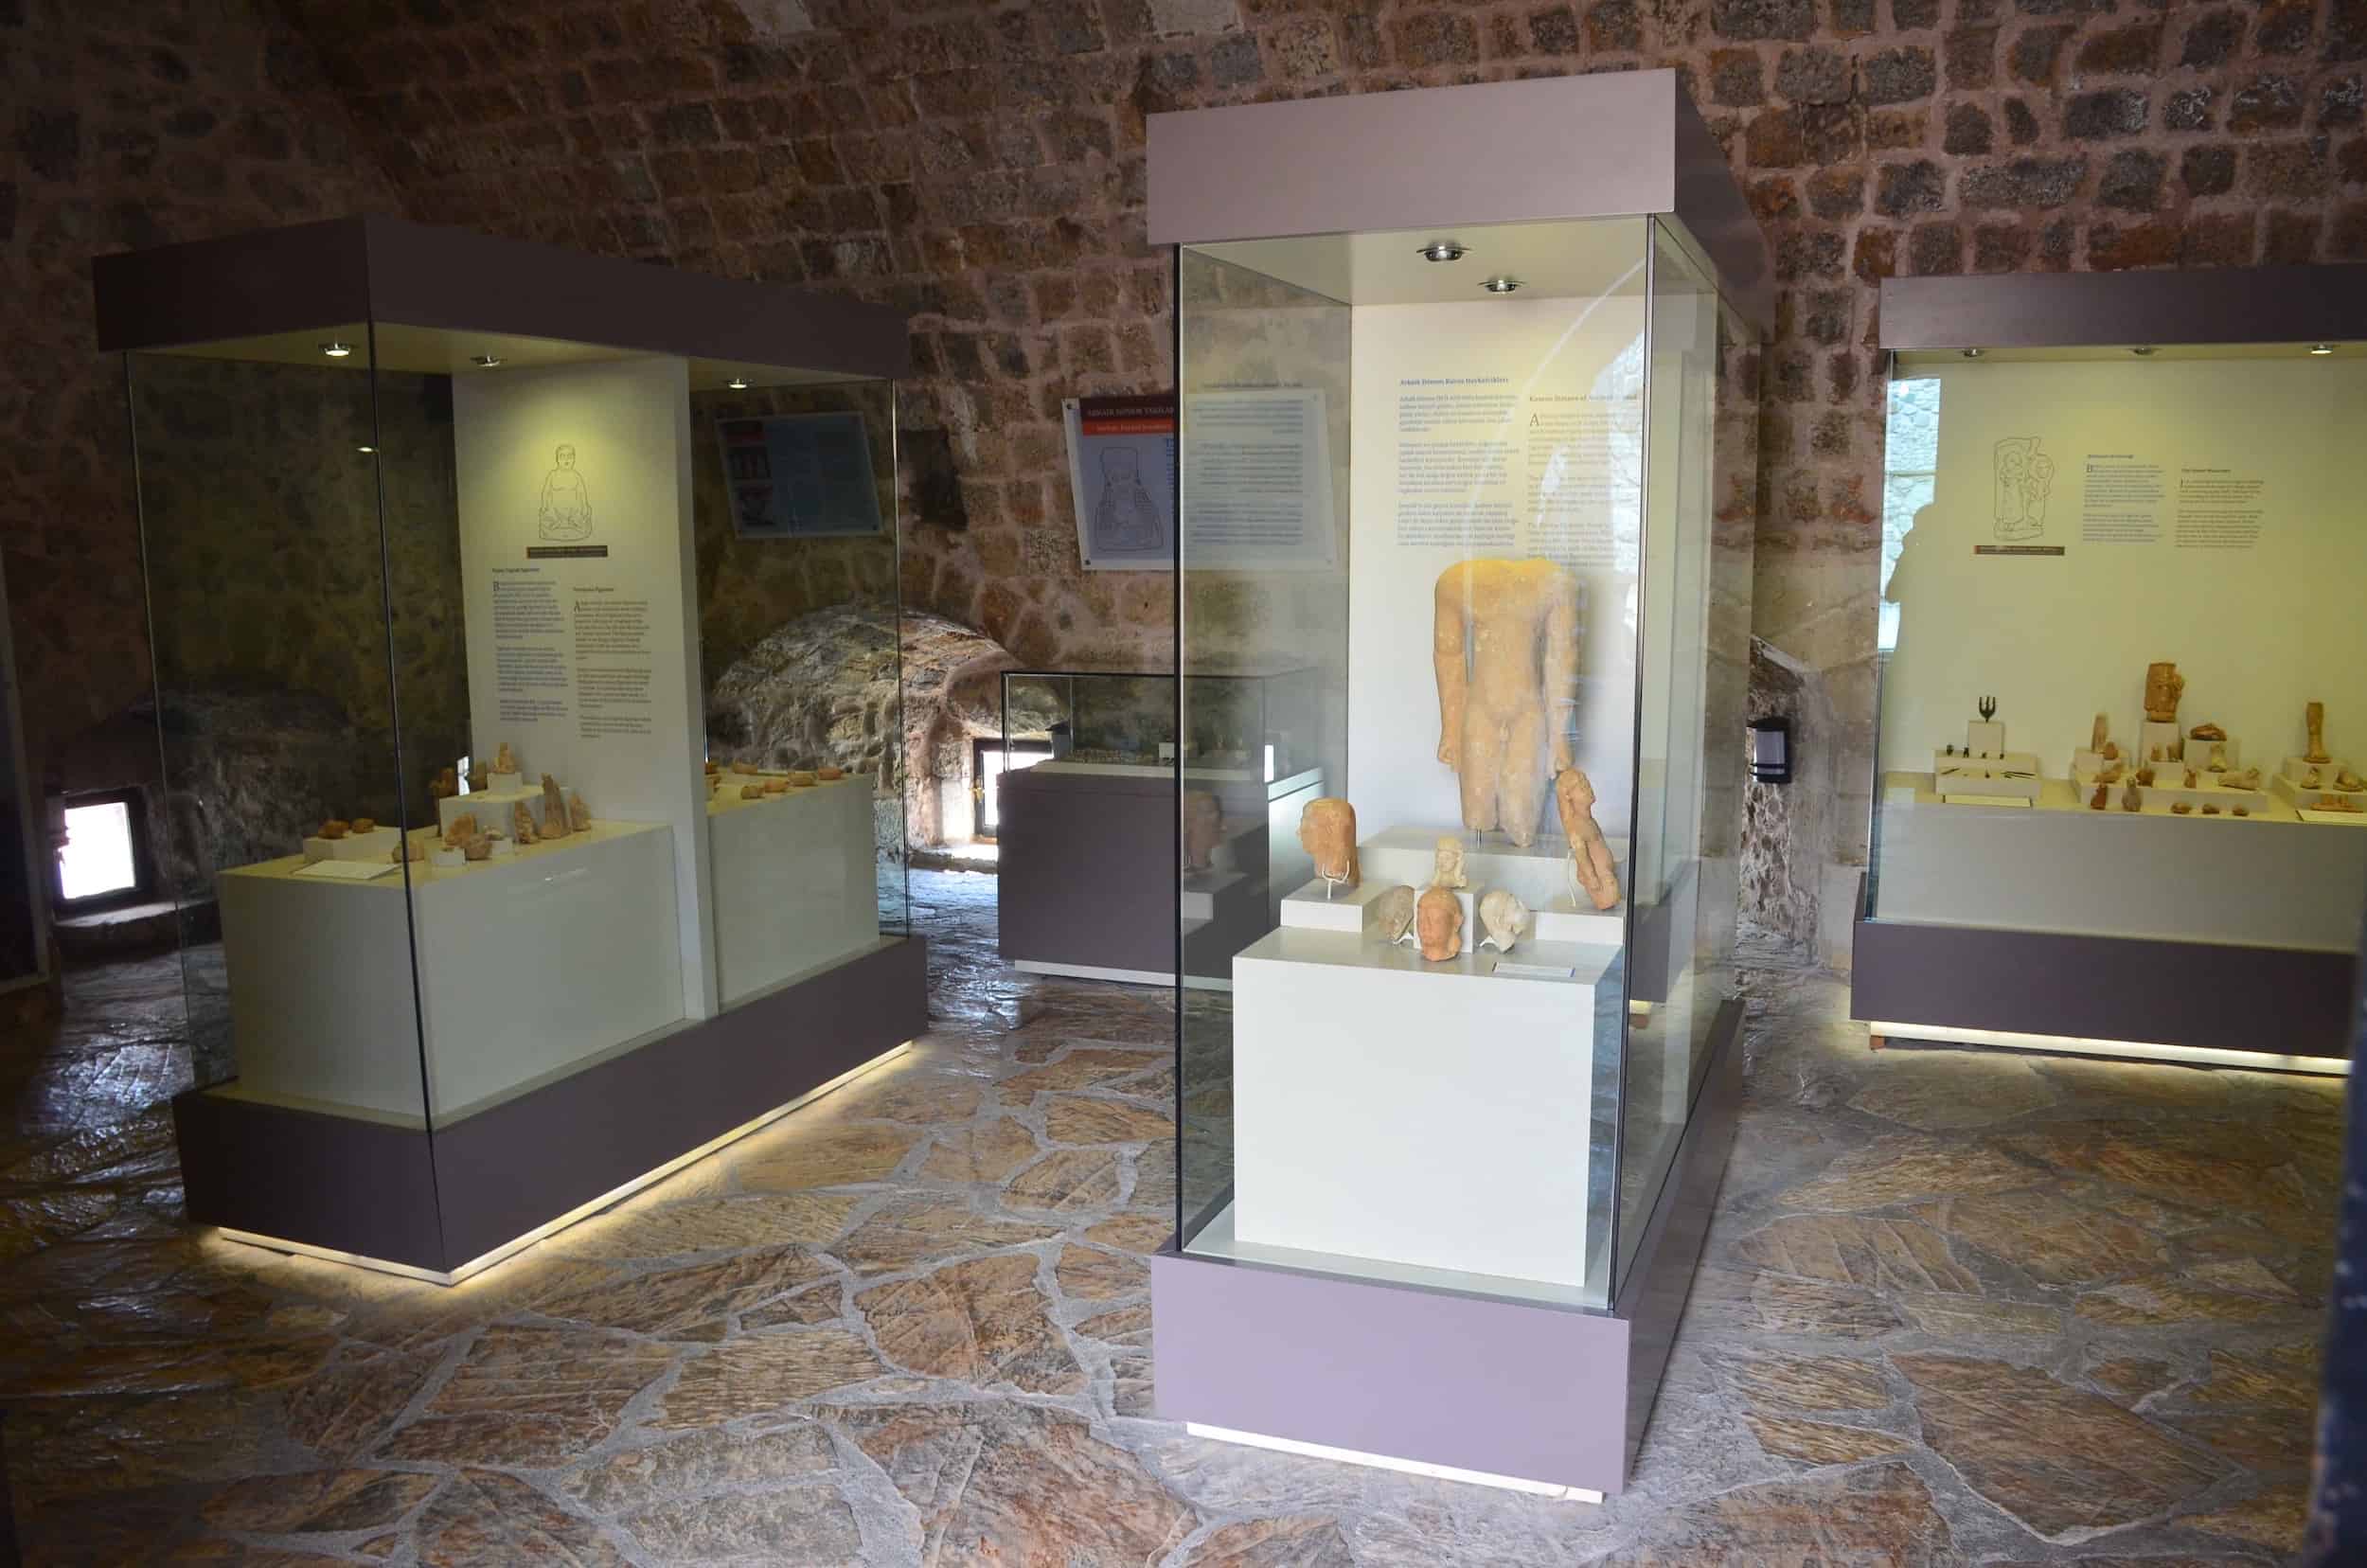 Emecik-Burgaz Hall at the Marmaris Museum at Marmaris Castle in Marmaris, Turkey